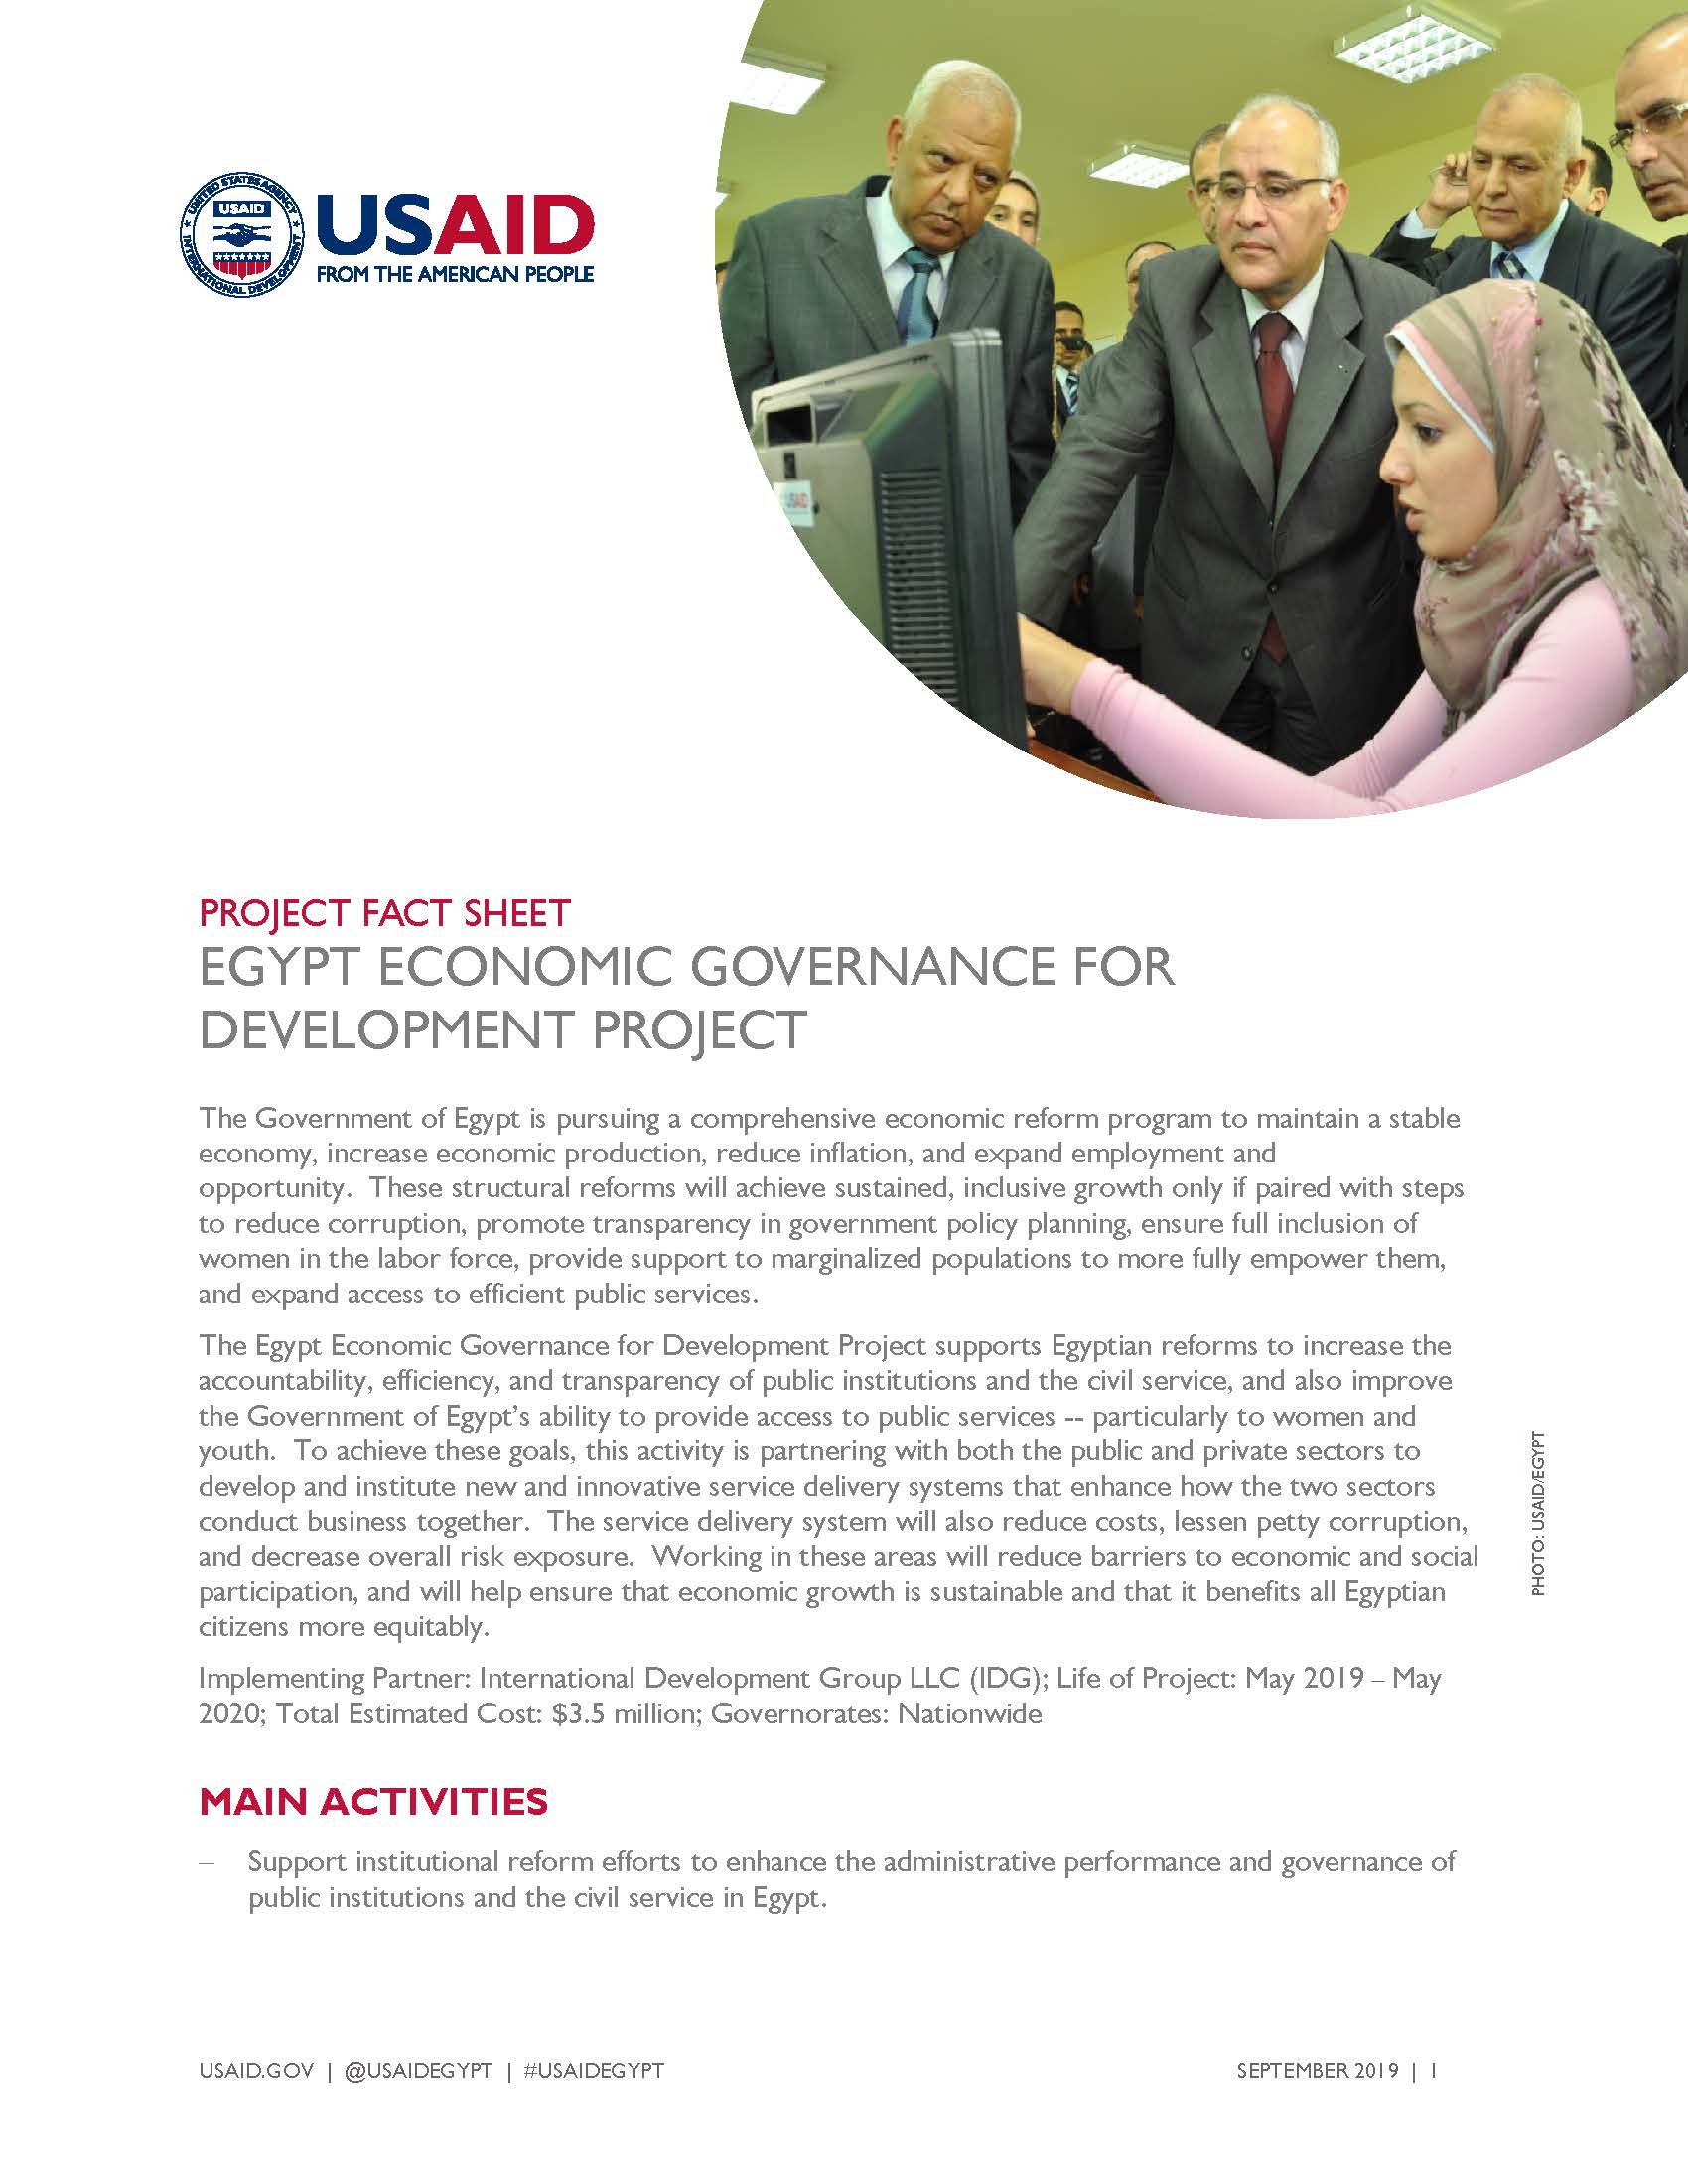 USAID/Egypt Activity Fact Sheet: Egypt Economic Governance for Development Project 